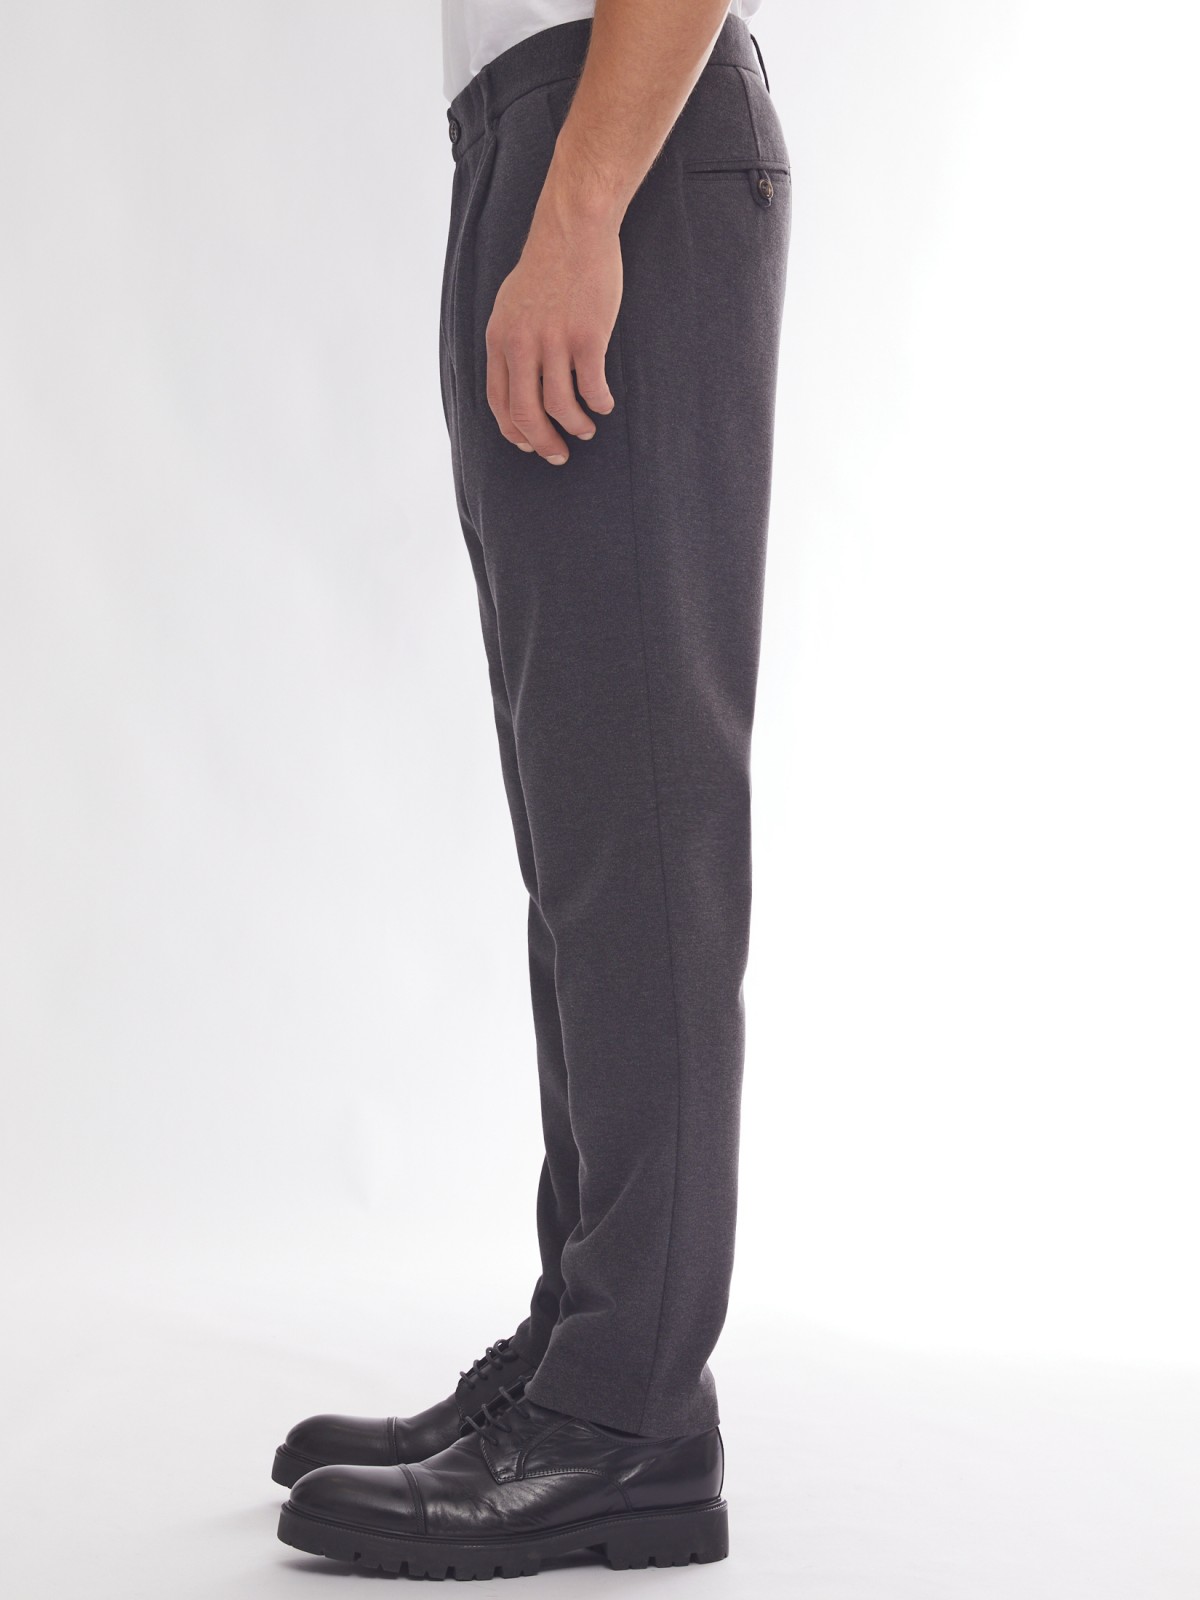 Офисные брюки силуэта Tapered zolla 014117366013, цвет темно-серый, размер 30 - фото 4